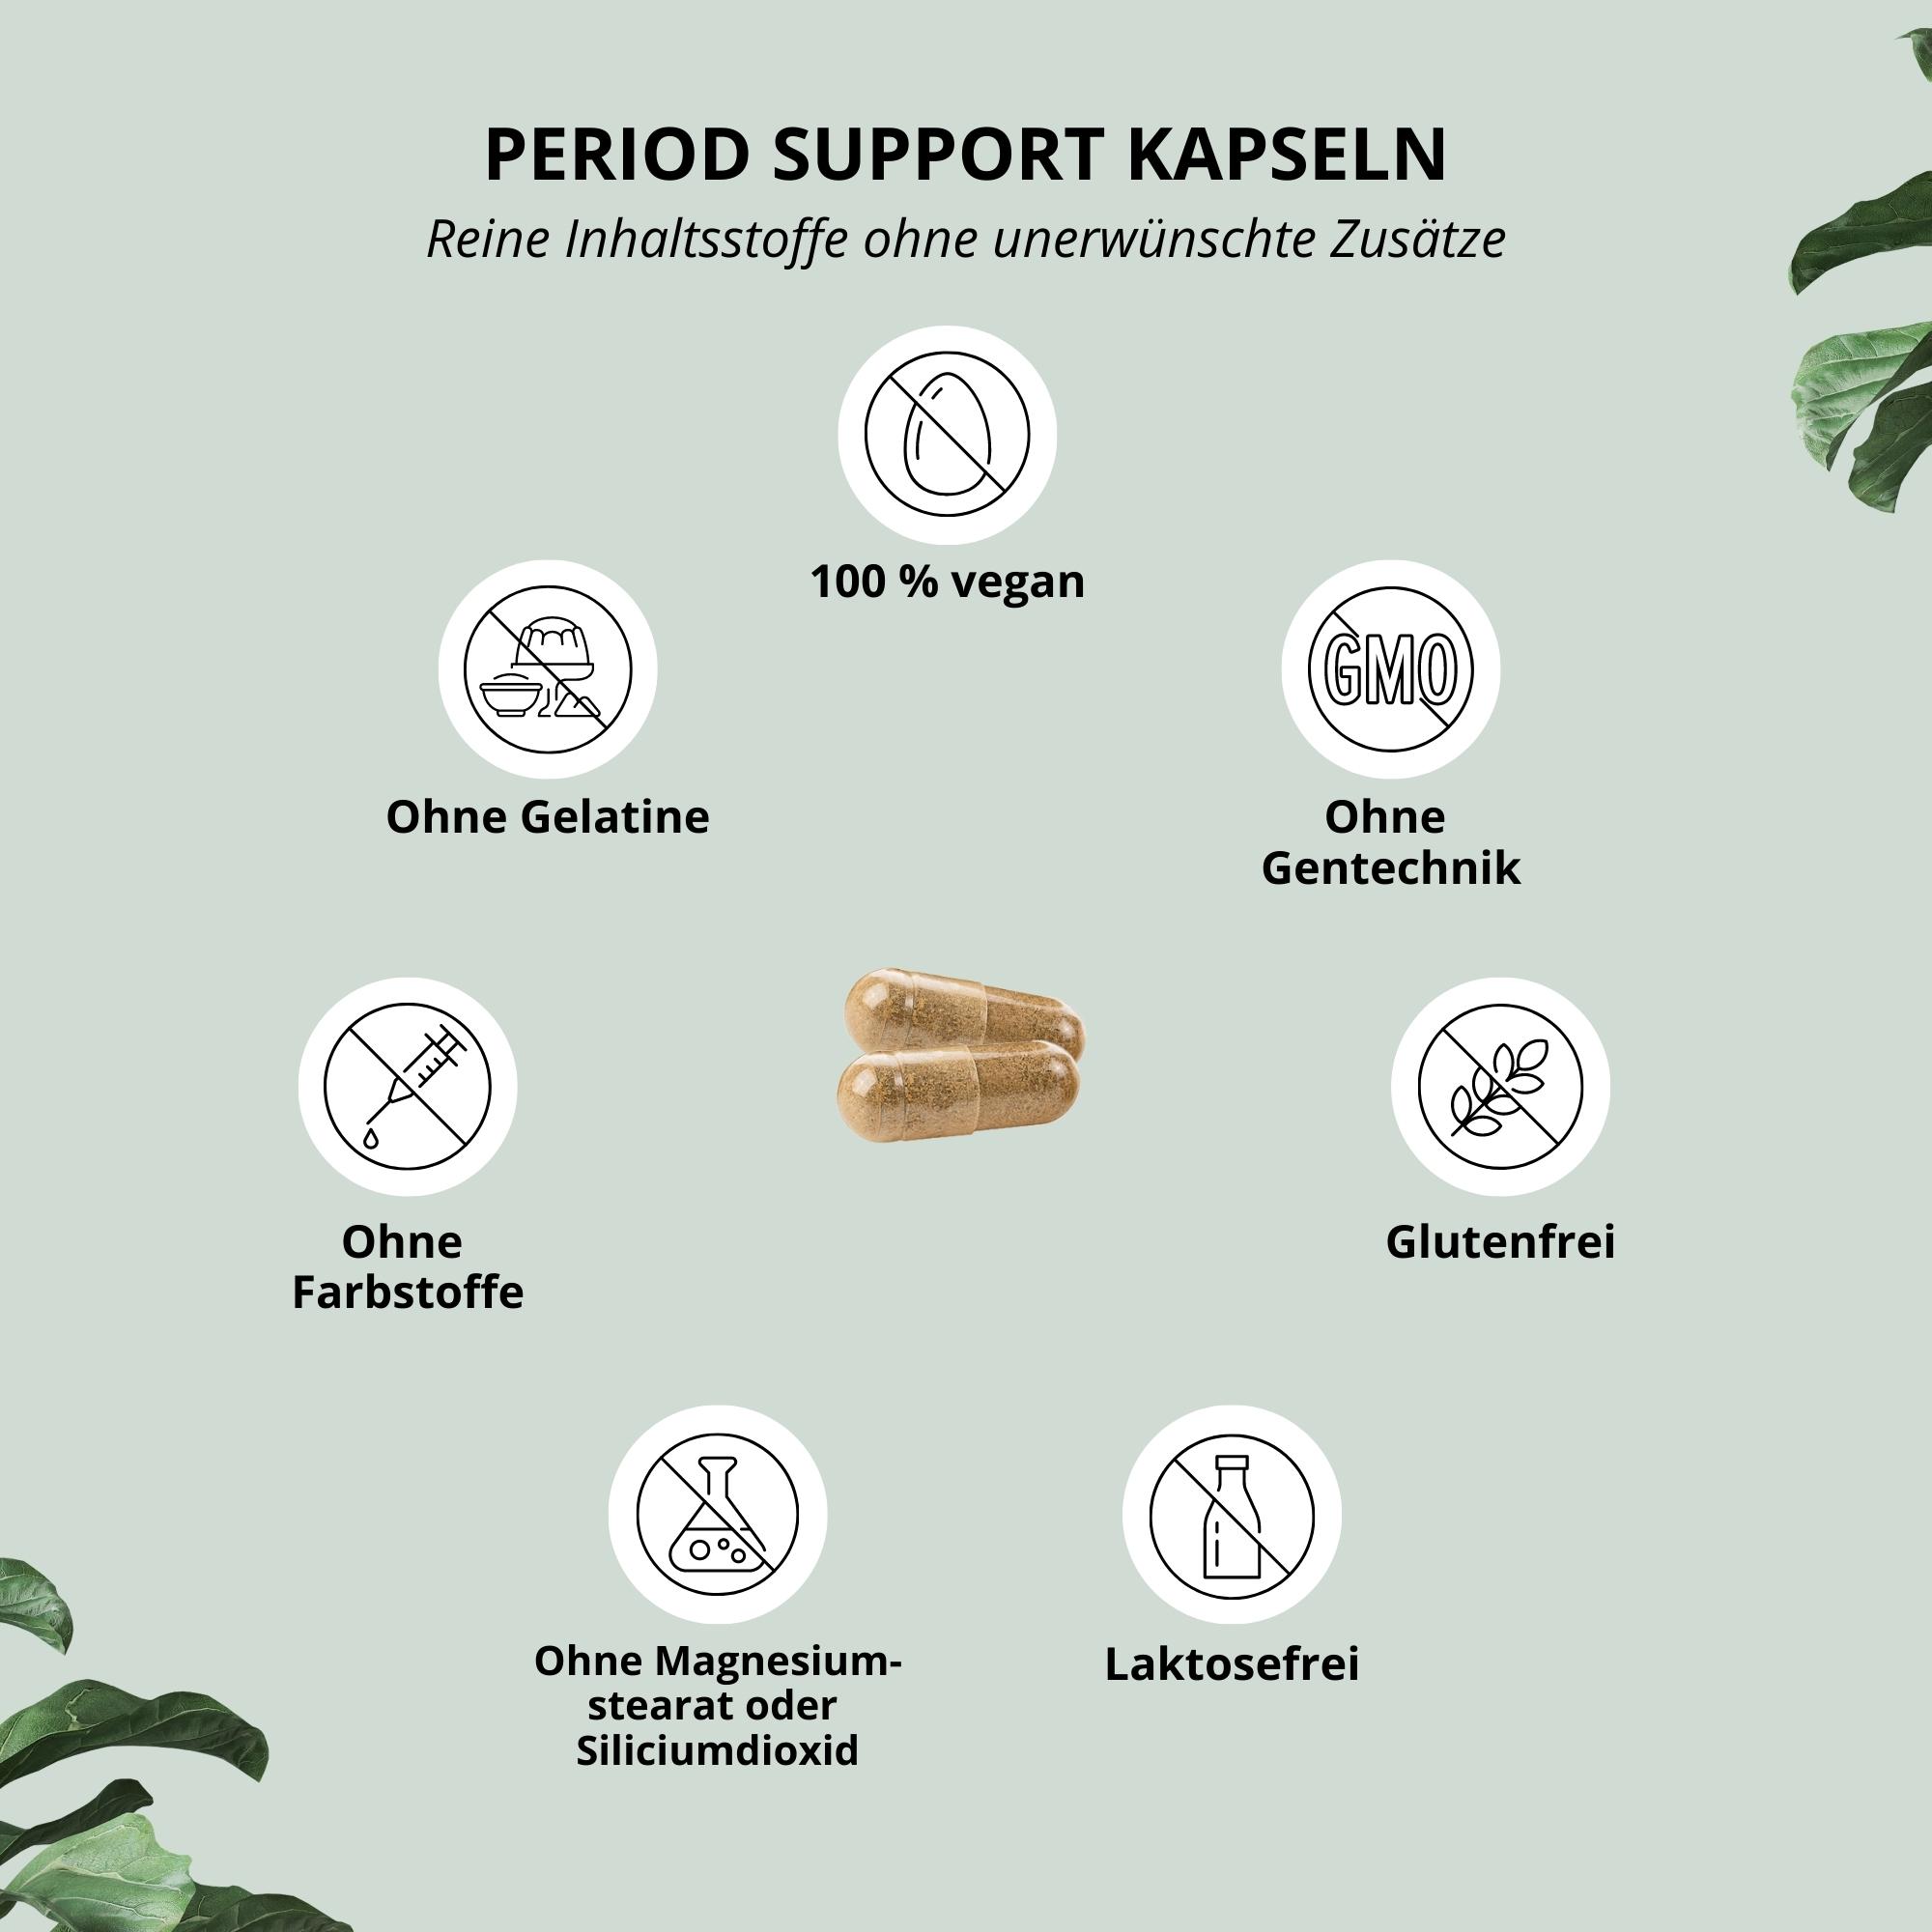 Period Support Kapseln